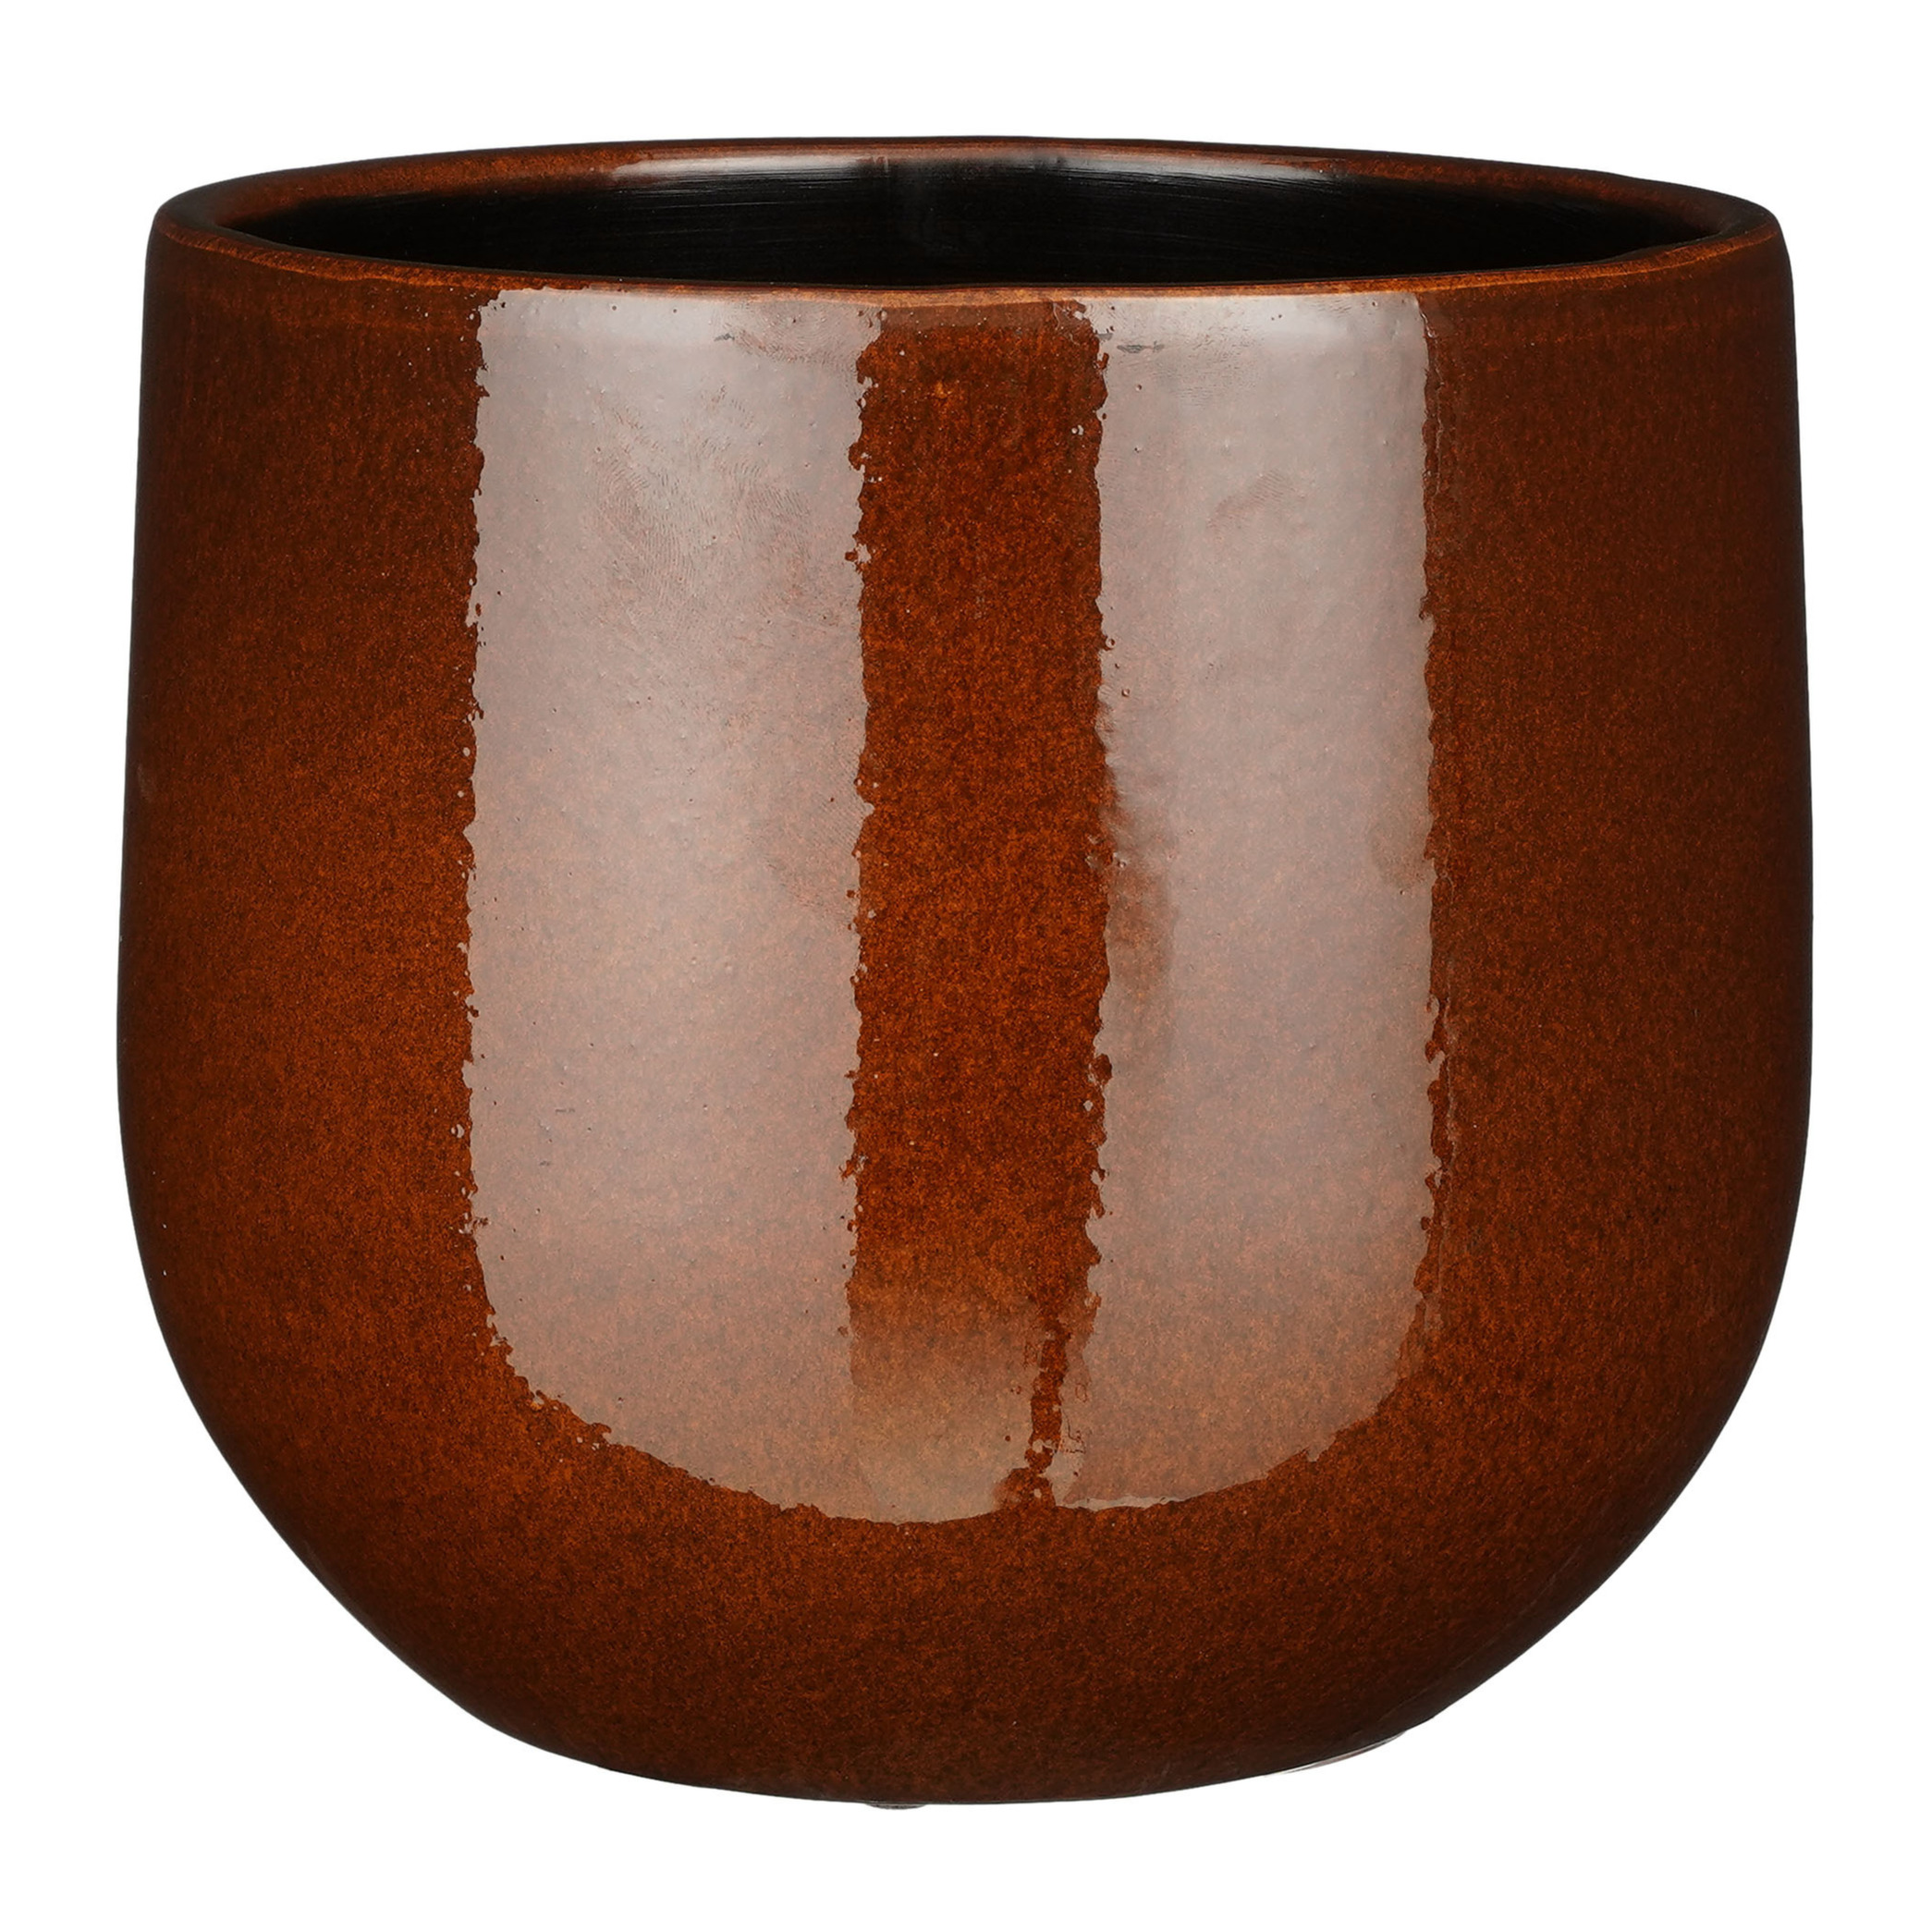 Plantenpot-bloempot keramiek terra bruin speels licht gevlekt patroon D25-H20 cm